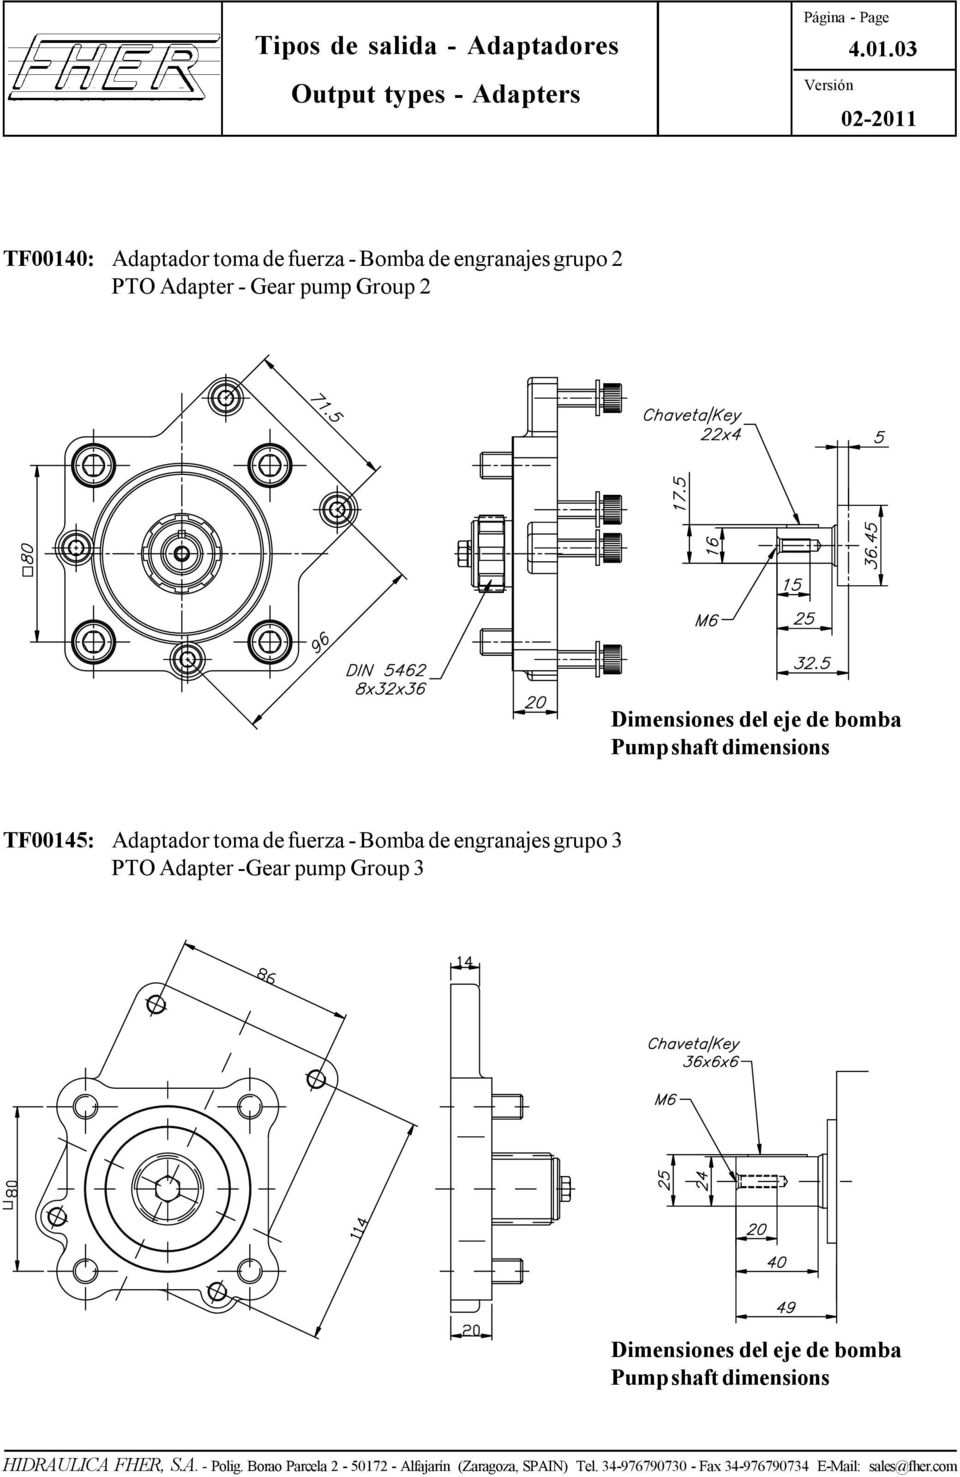 de bomba Pump shaft dimensions TF00145: Adaptador toma de fuerza - Bomba de engranajes grupo 3 PTO Adapter -Gear pump Group 3